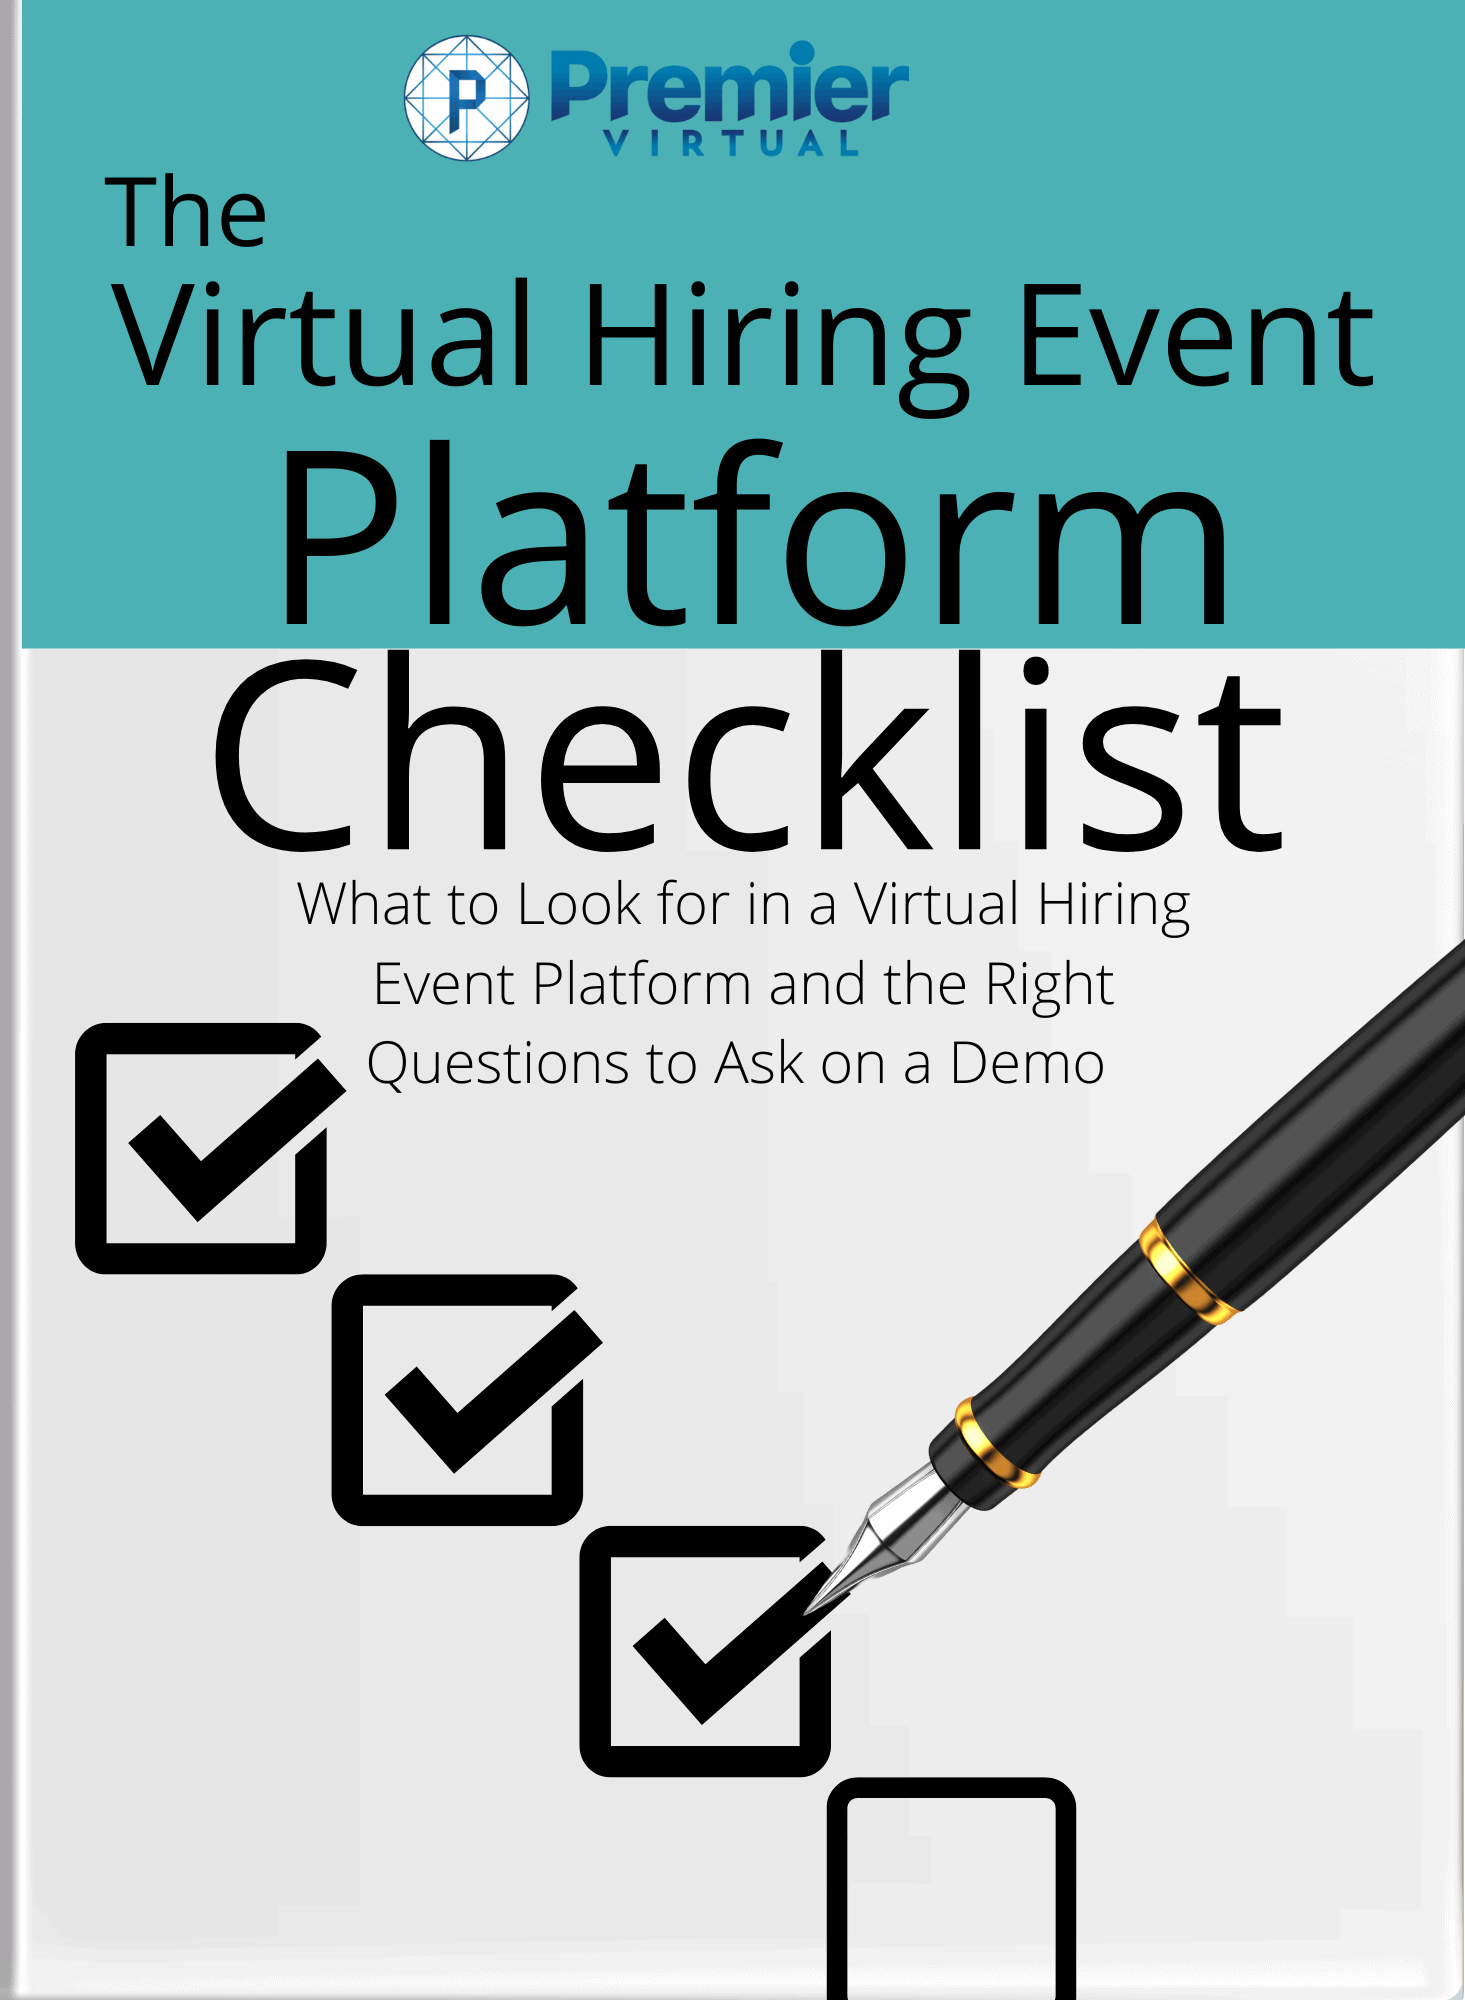 Premier Virtual - Virtual Hiring Event Platform Checklist